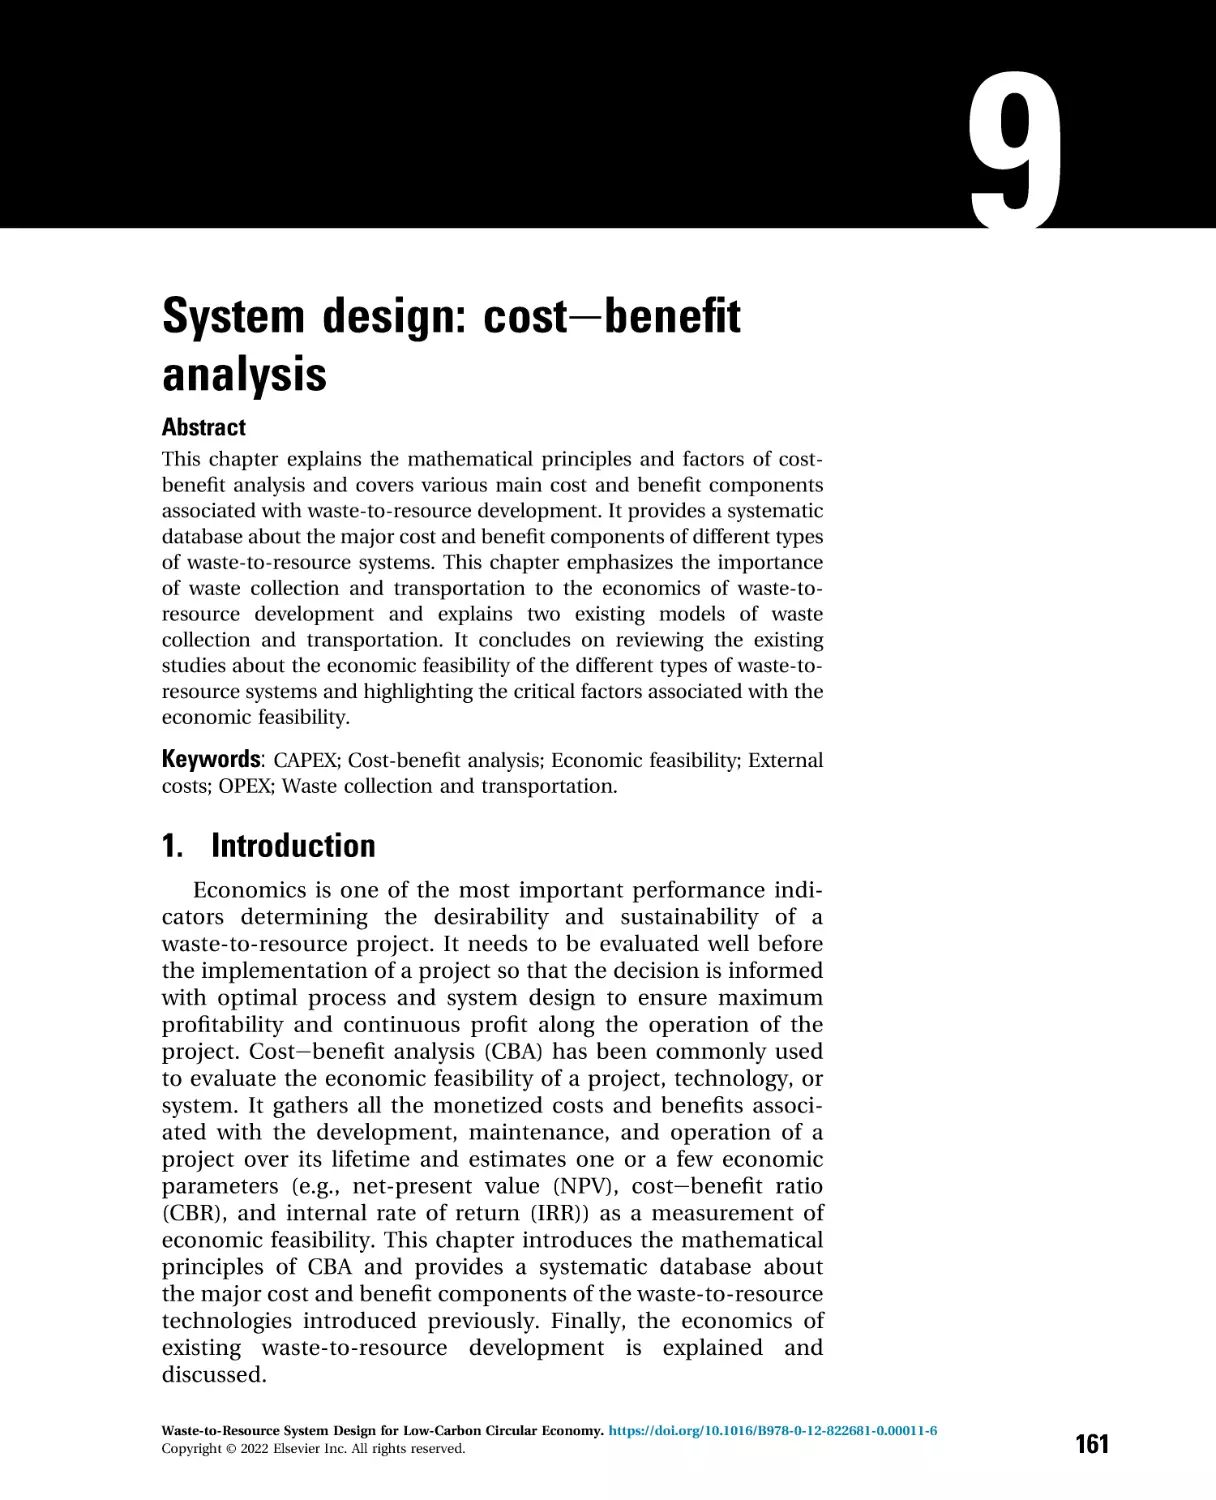 9 - System design
1. Introduction